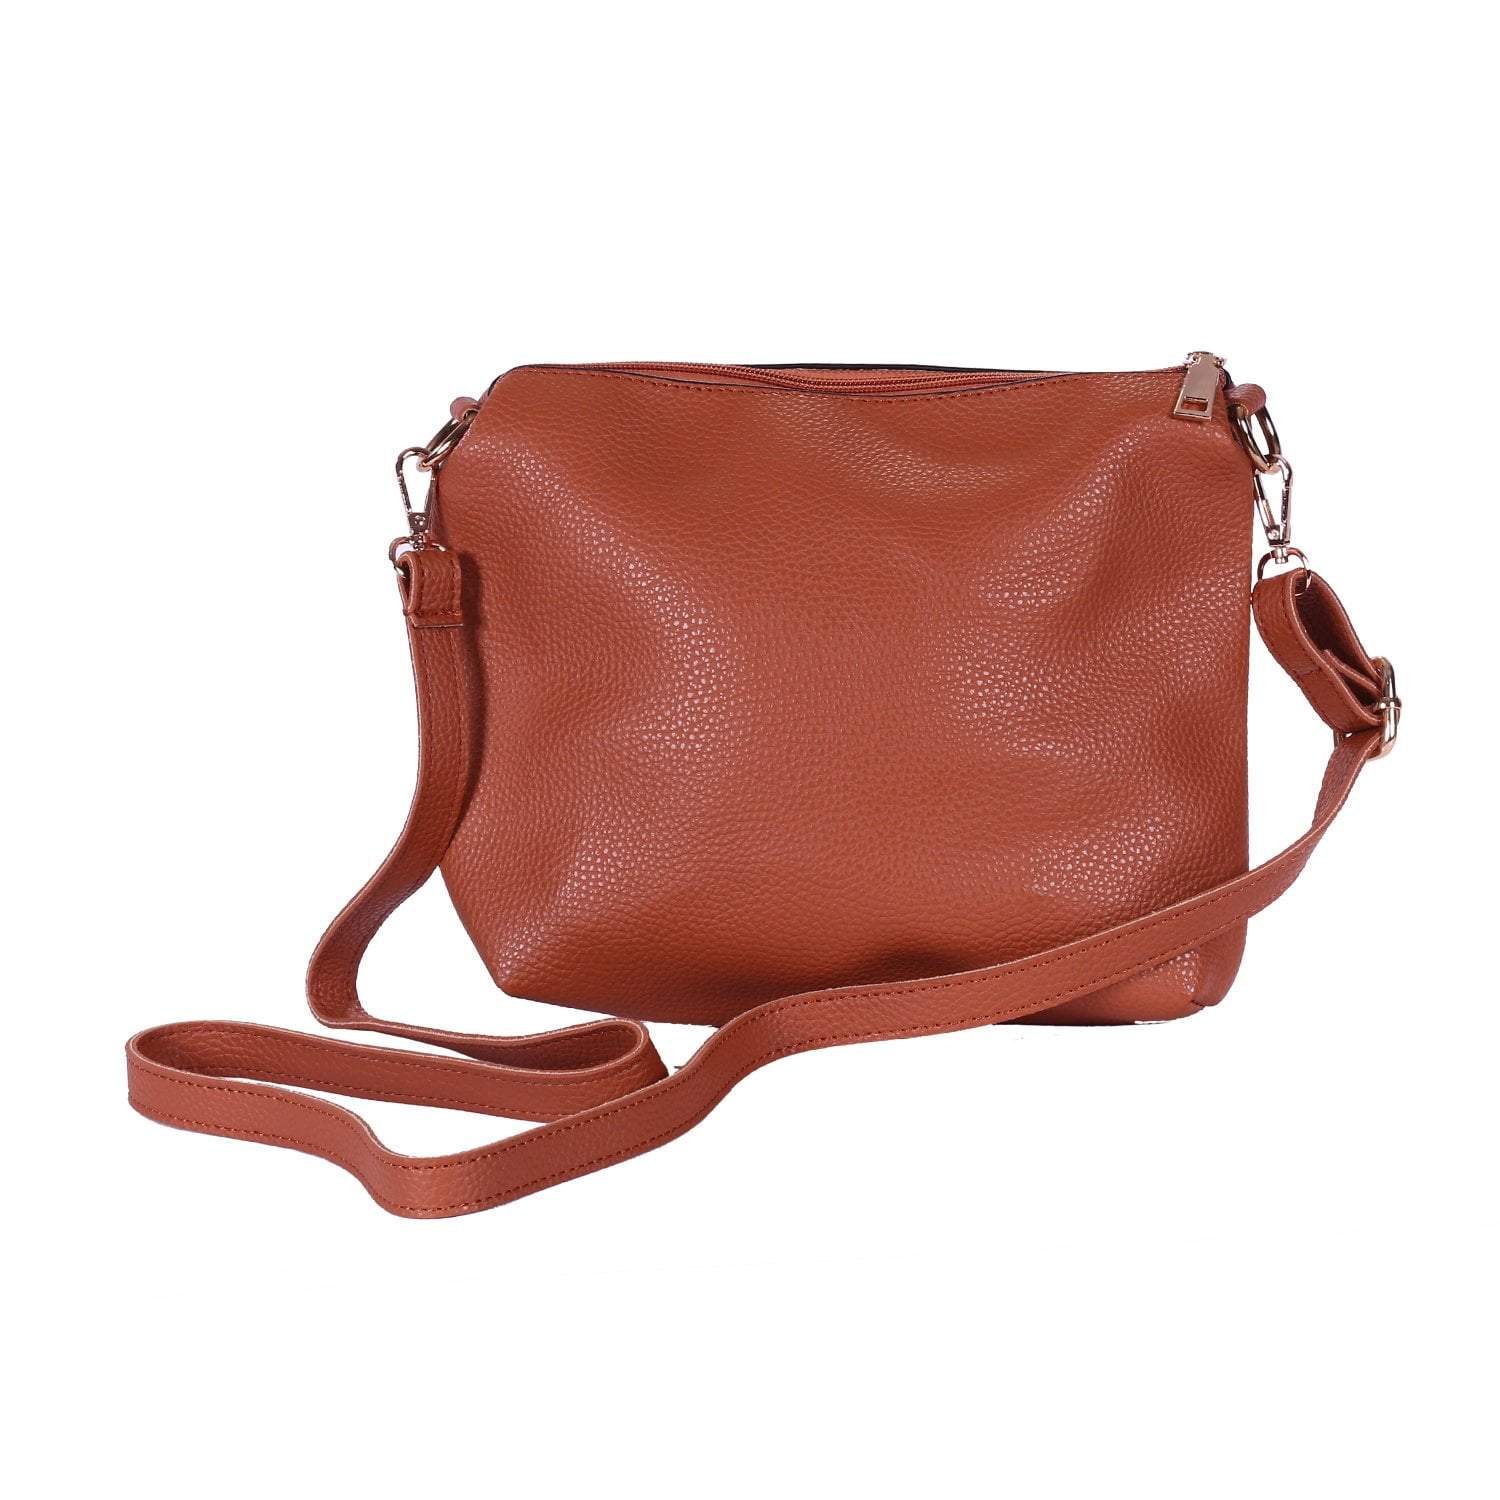 kinnoti Handbags Brown Metal Handle Satchel Bag